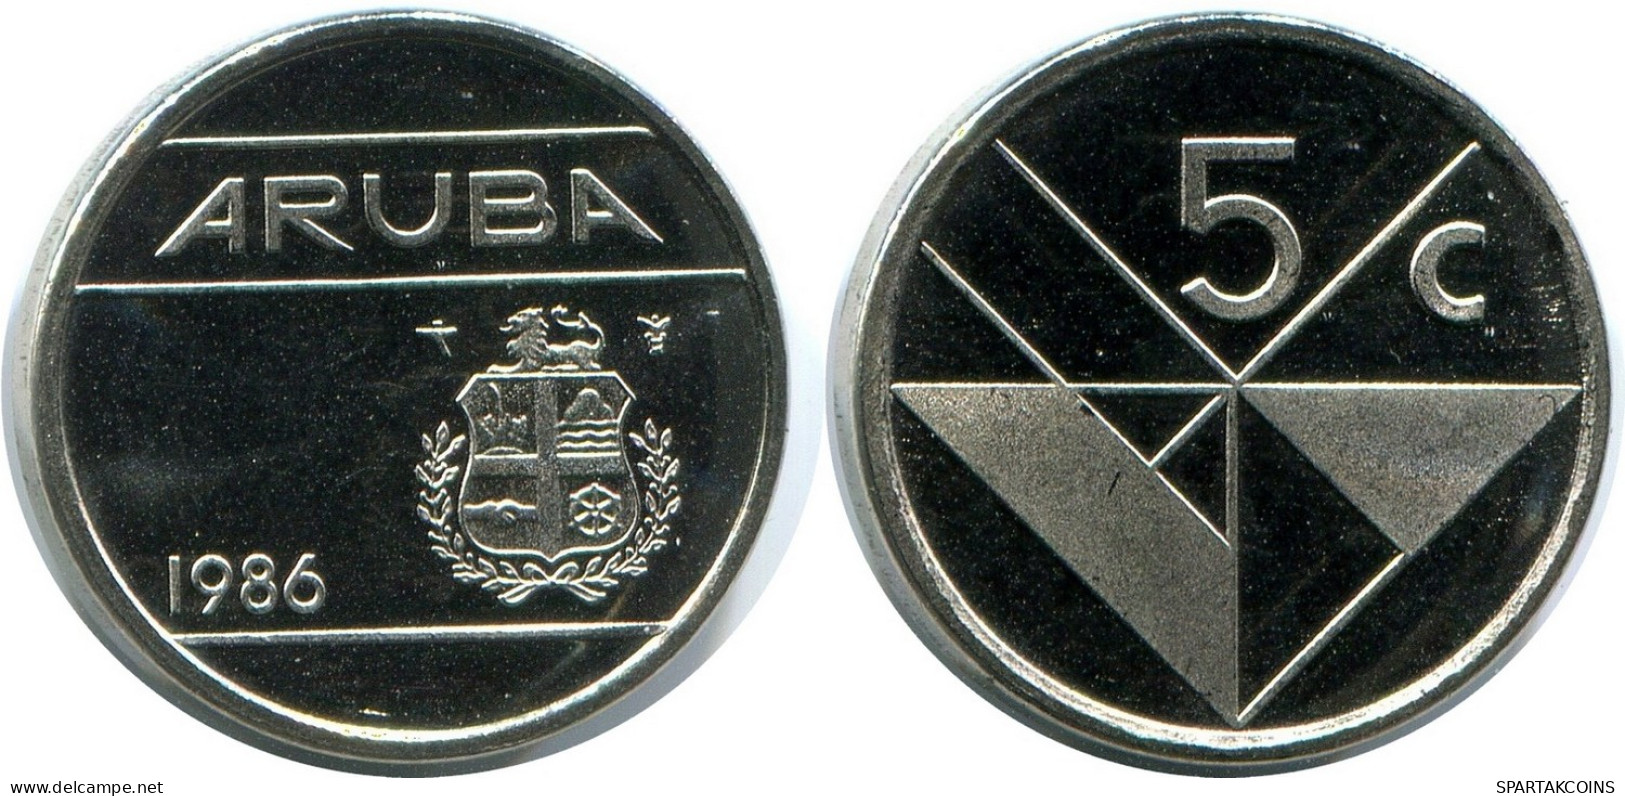 5 CENTS 1986 ARUBA Coin (From BU Mint Set) #AH111.U - Aruba